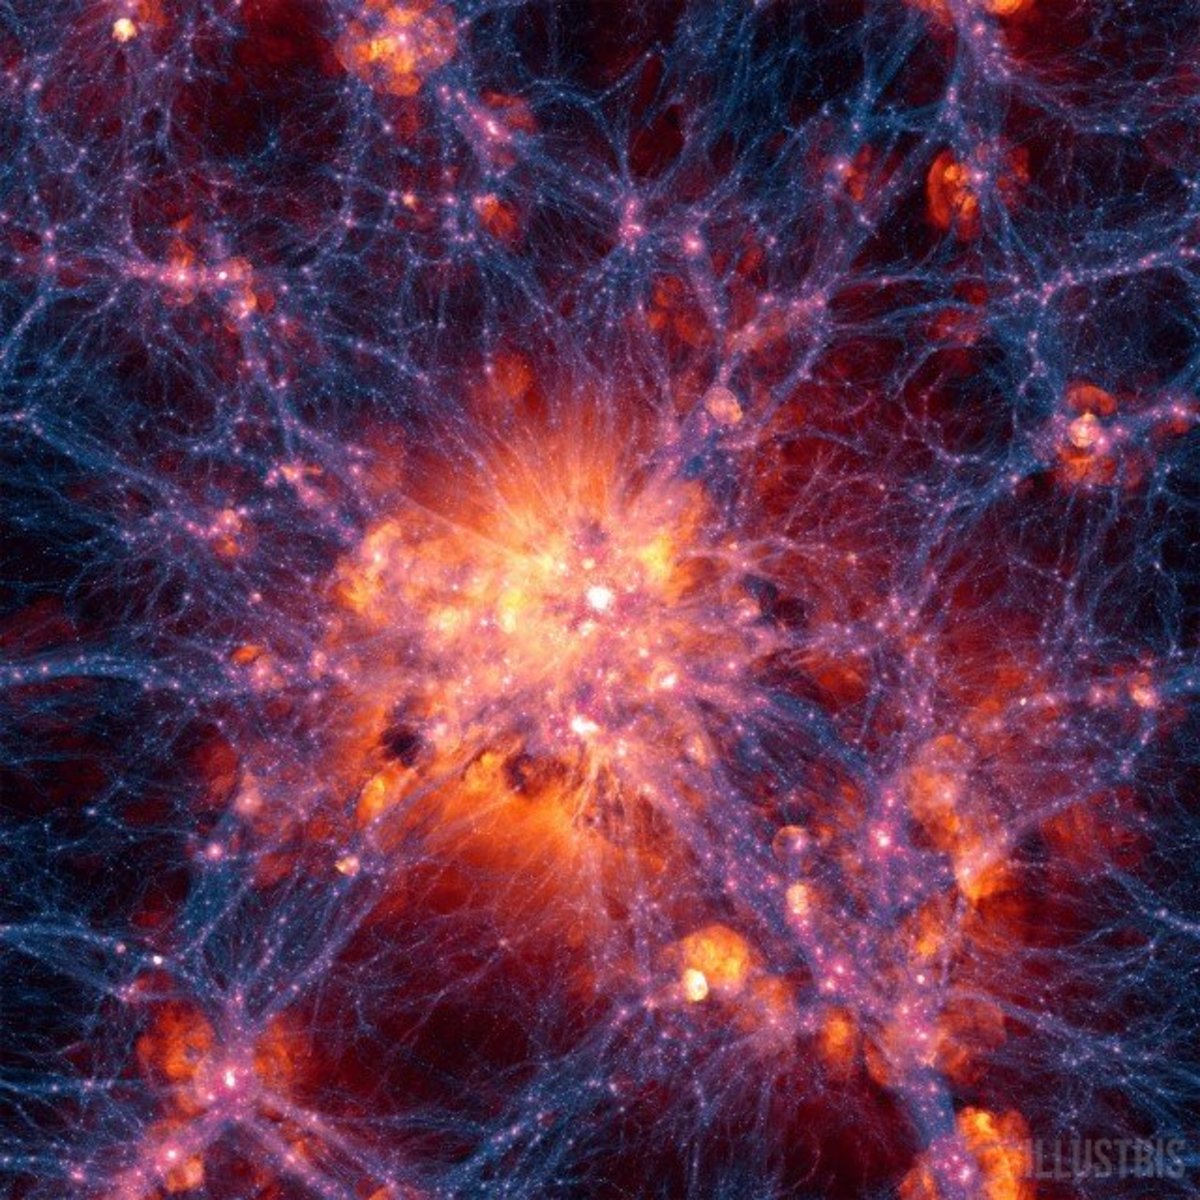 Dark matter theories